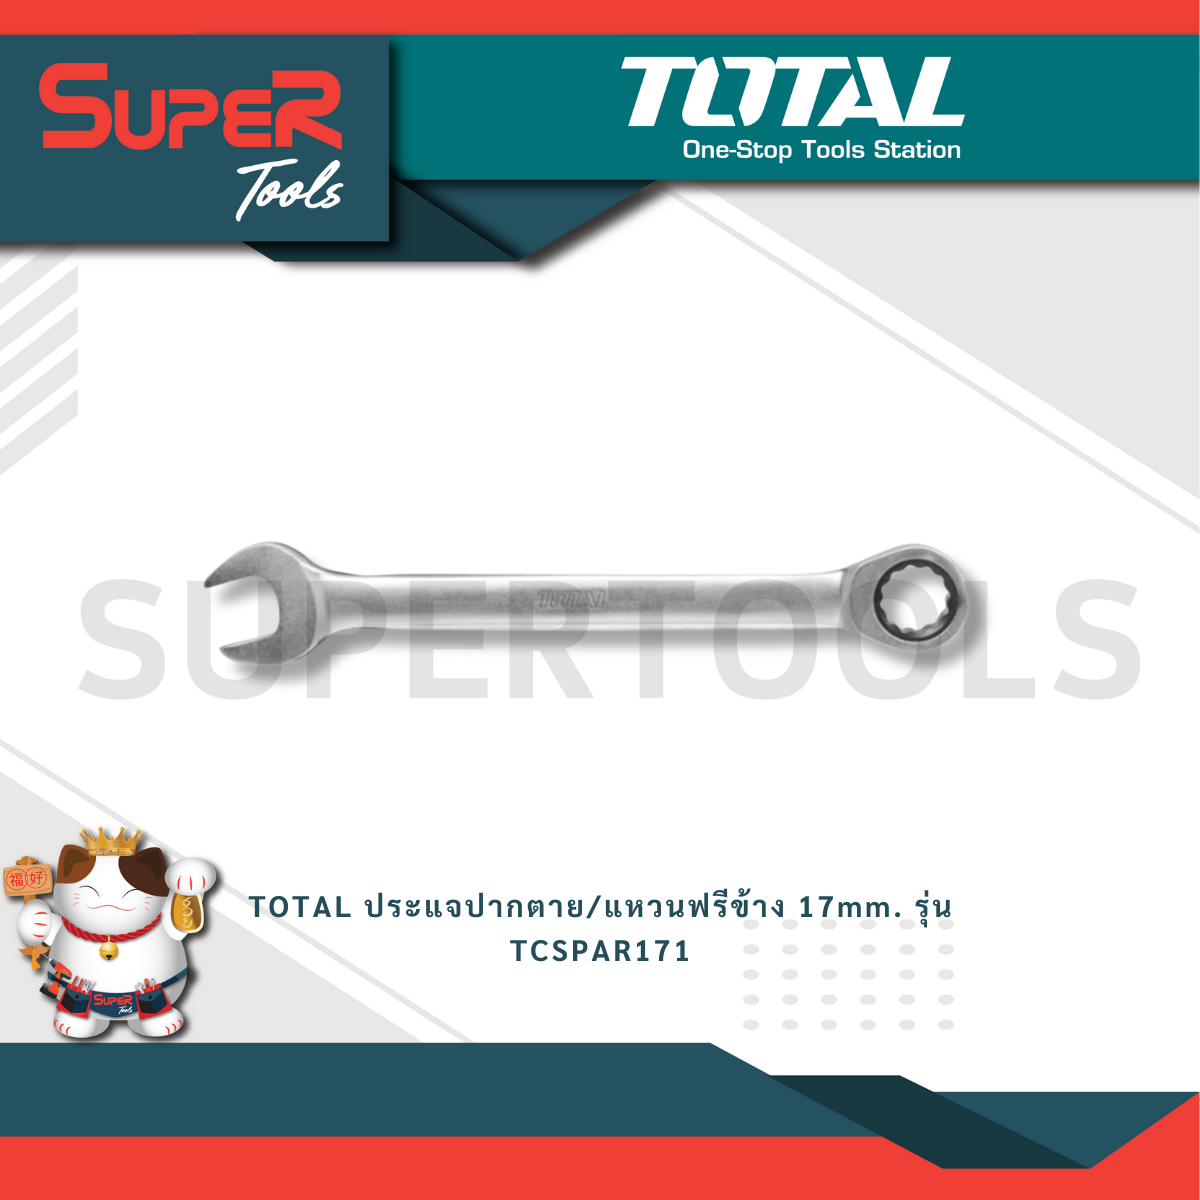 TOTAL ประแจปากตาย/แหวนฟรีข้าง 17mm. รุ่น TCSPAR171